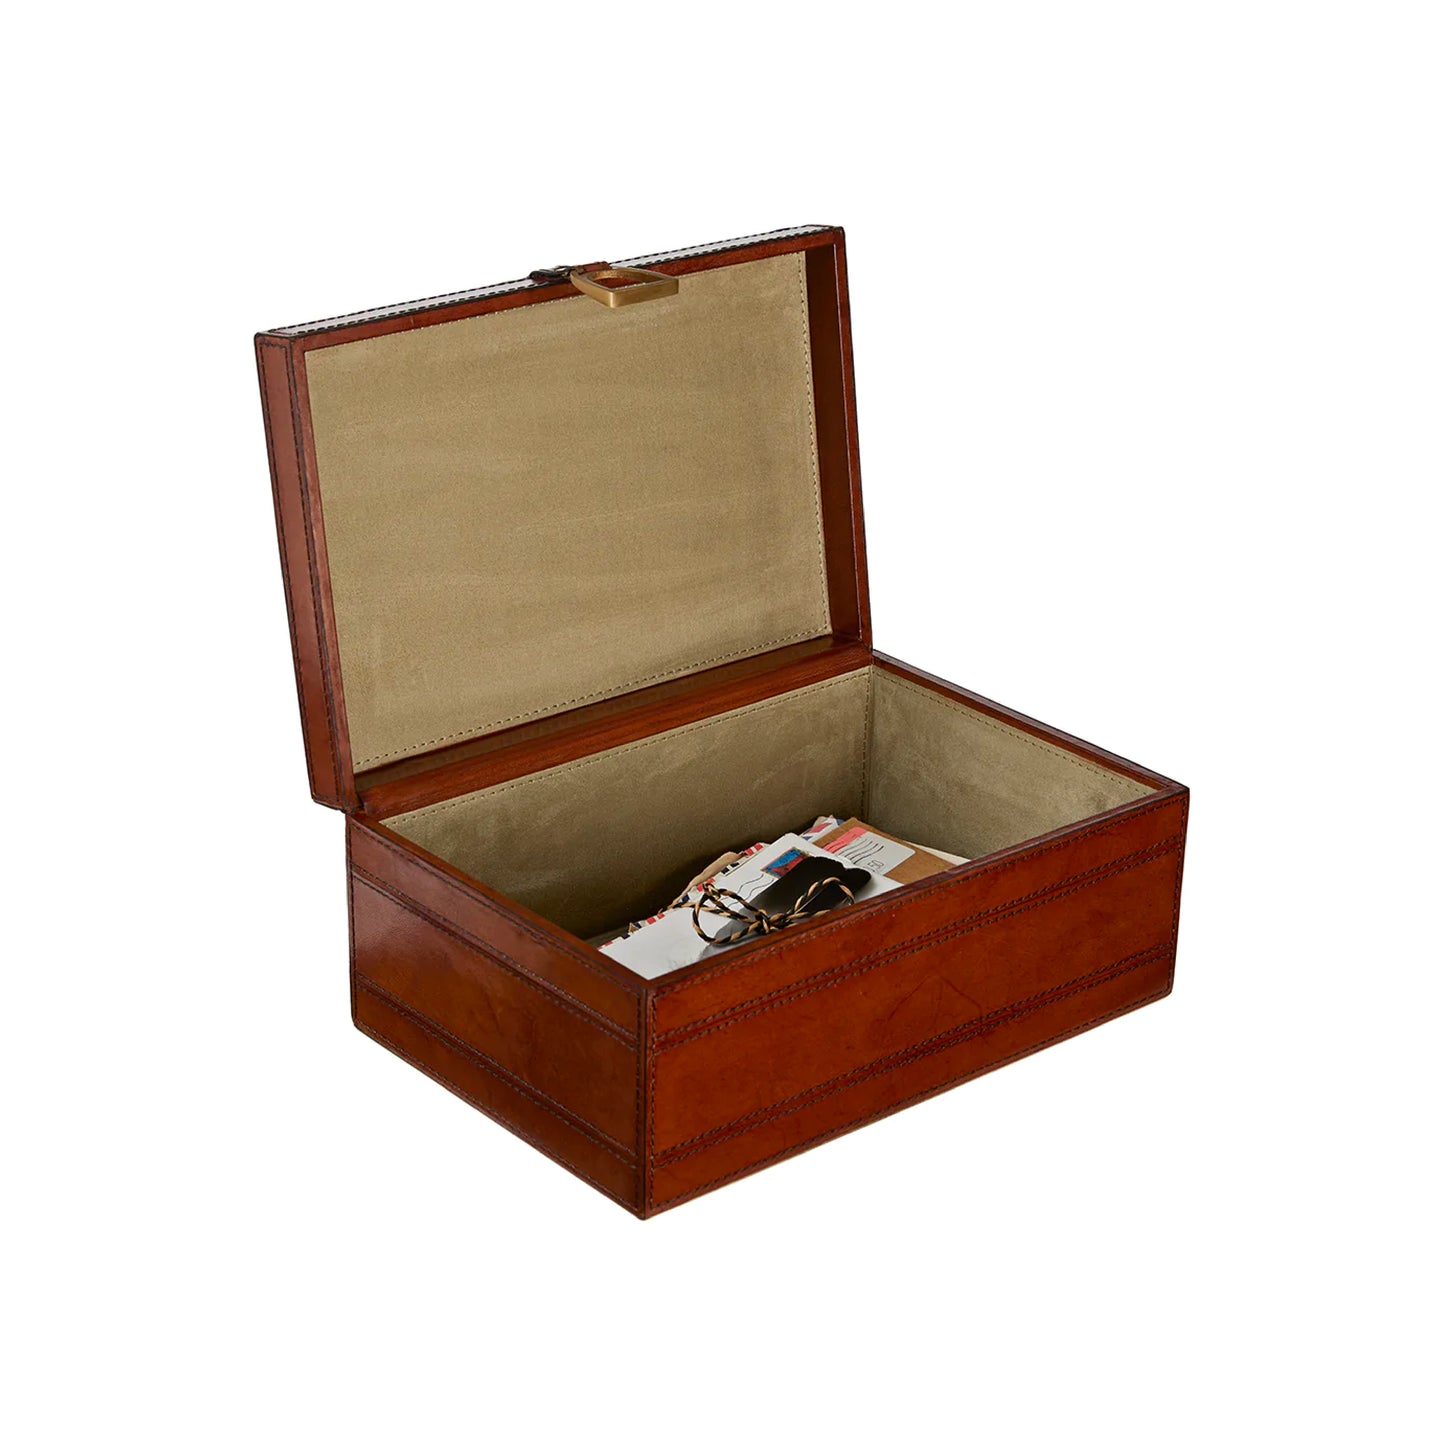 Stirup Vanity Box - Choose from Three Sizes or Set of Three